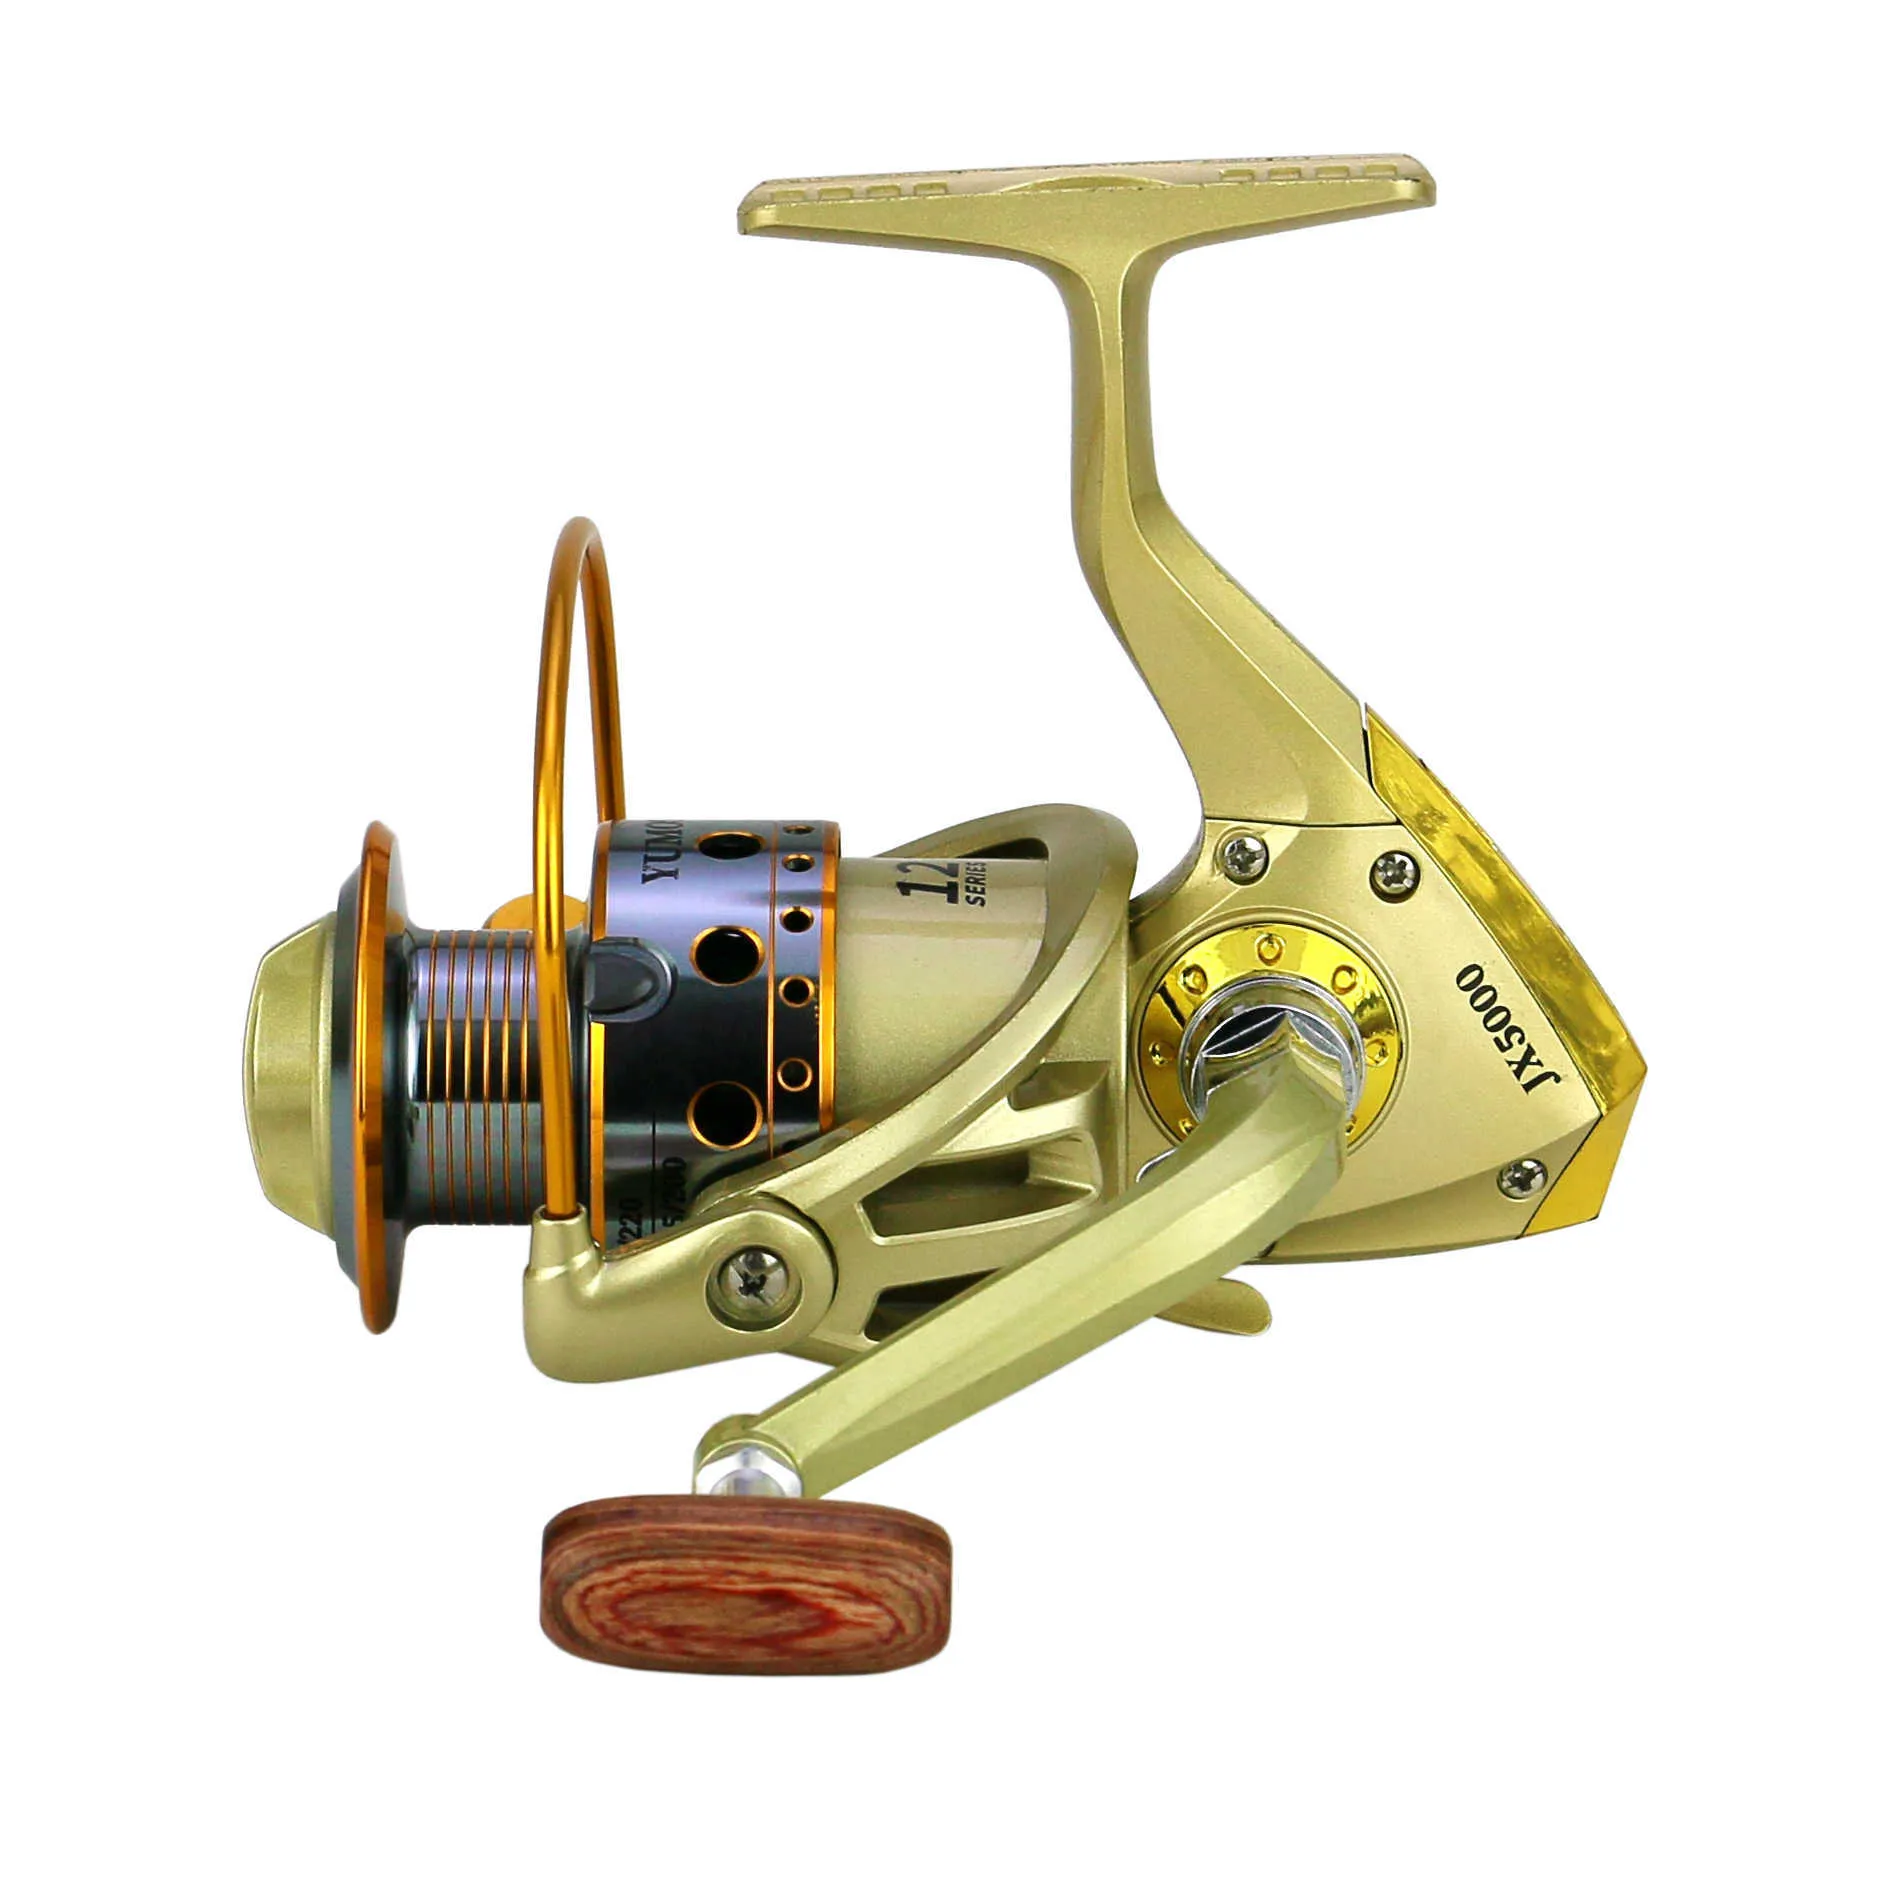 Buy Fishing Rod 12kg Max Drag online